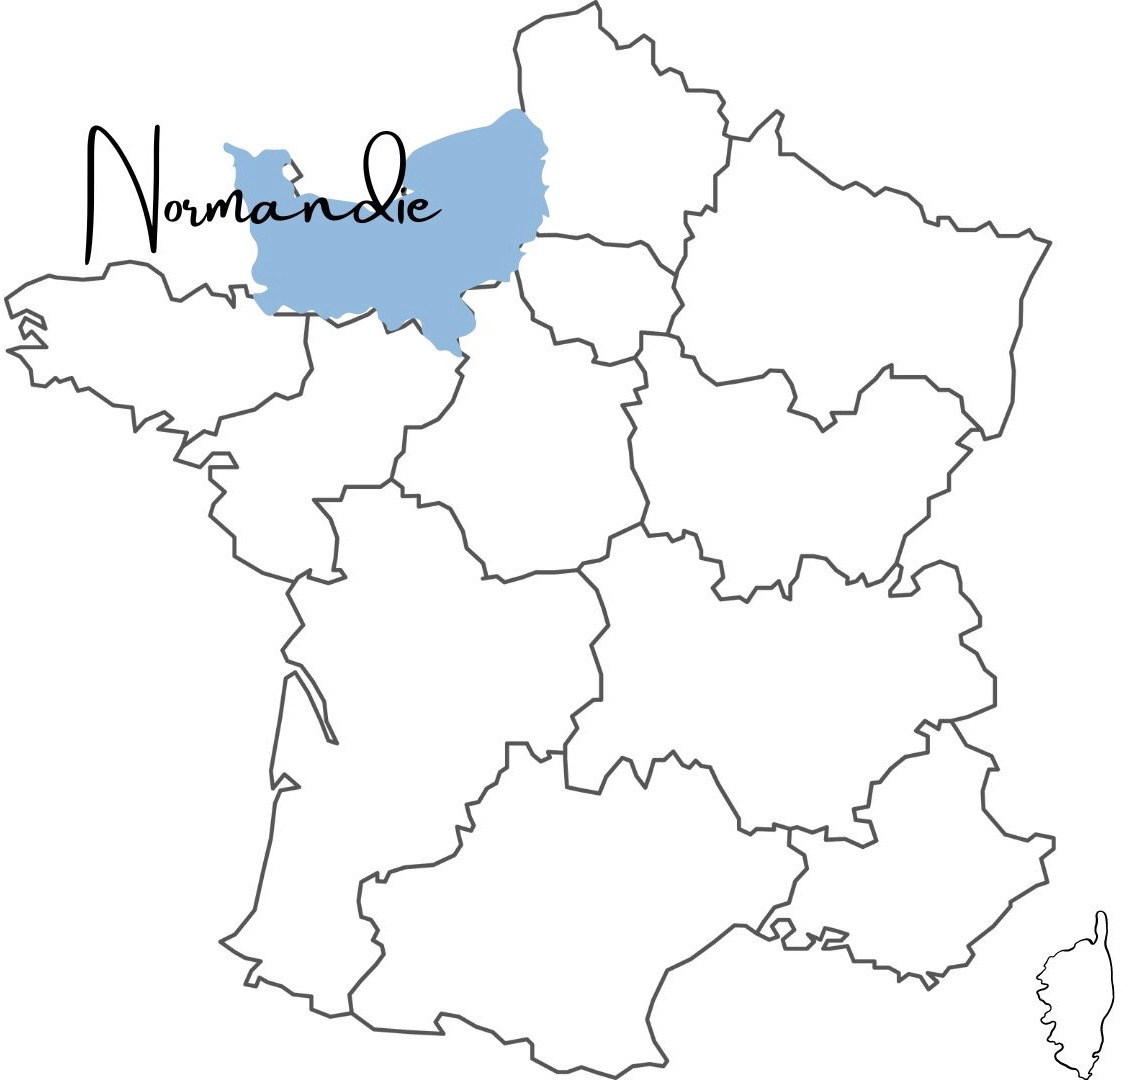 Visiter la Normandie guide pratique blog voyage